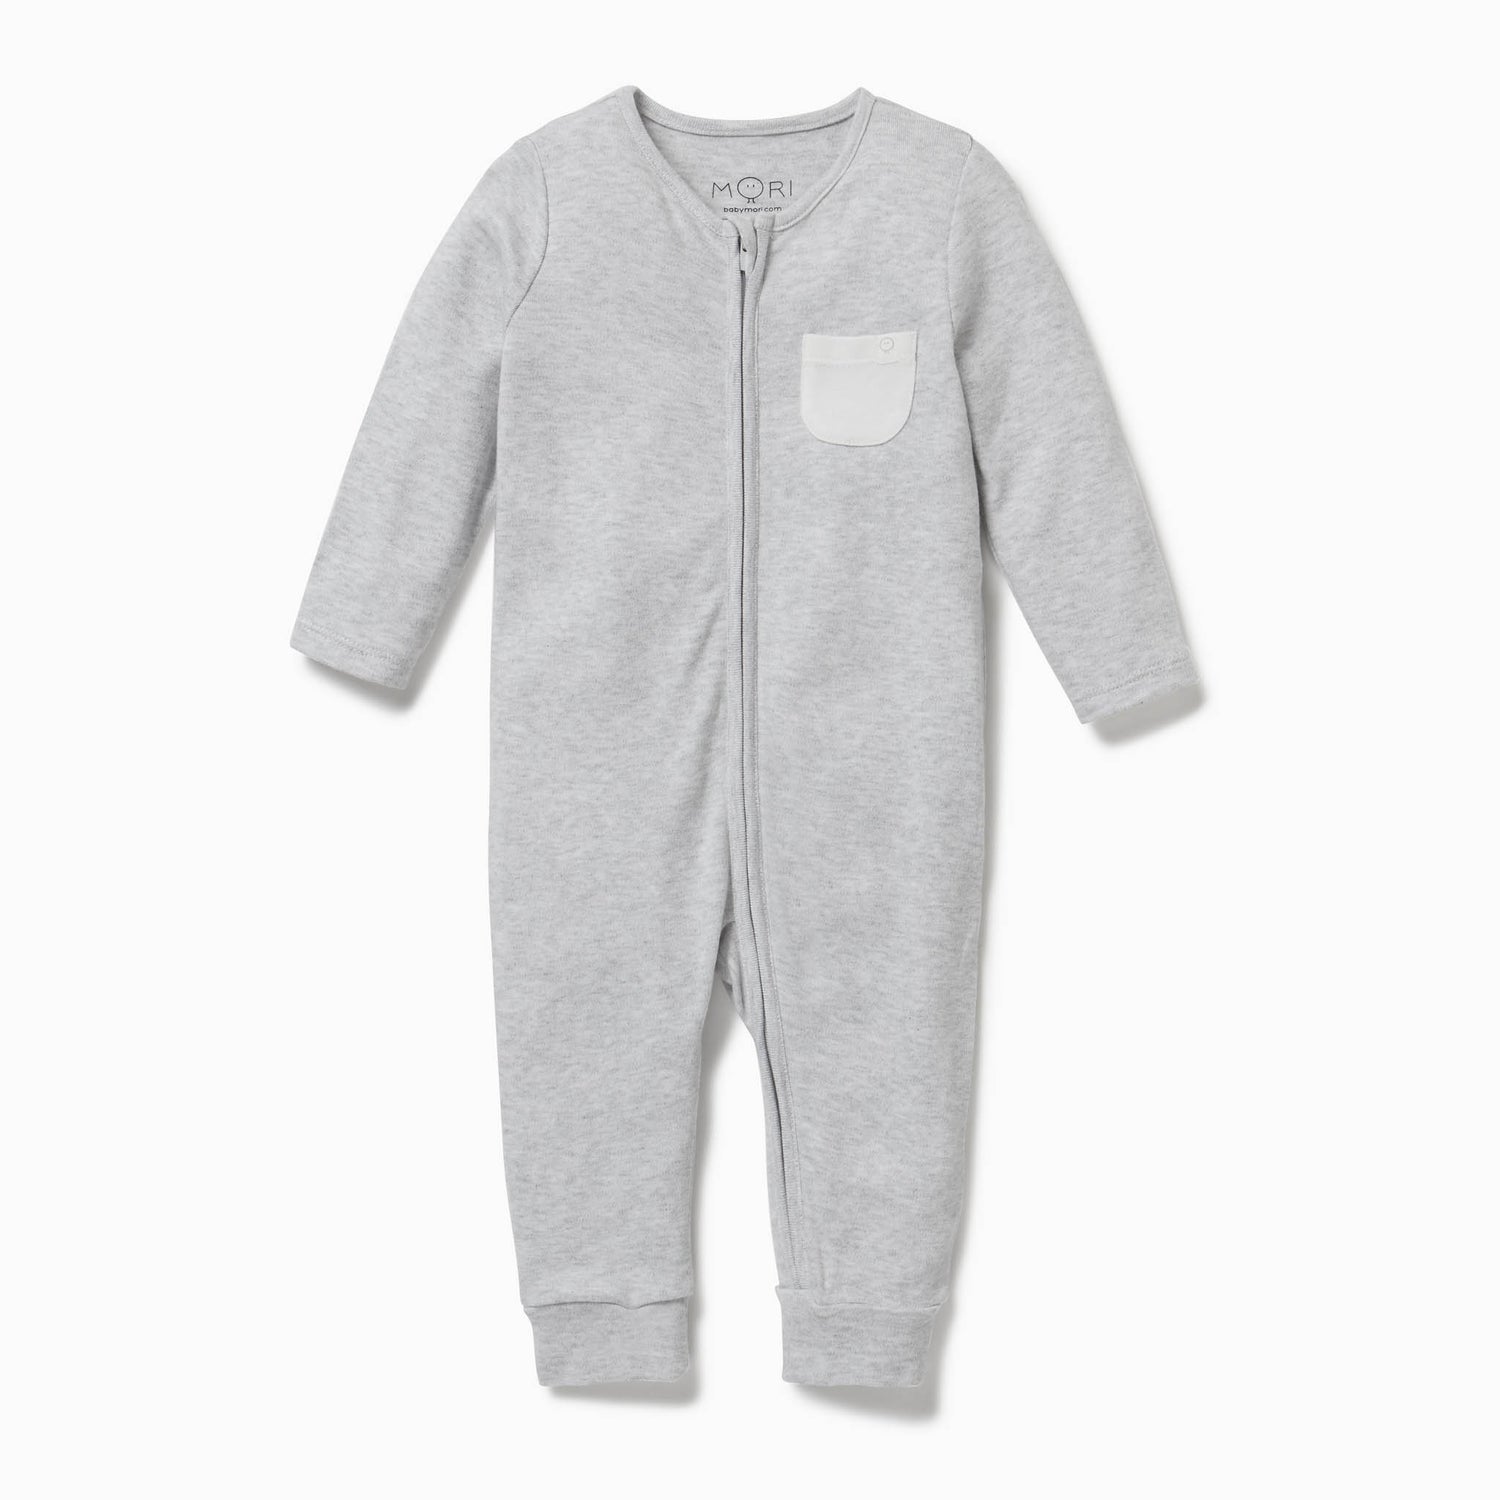 Grey zip up sleepsuit with no feet